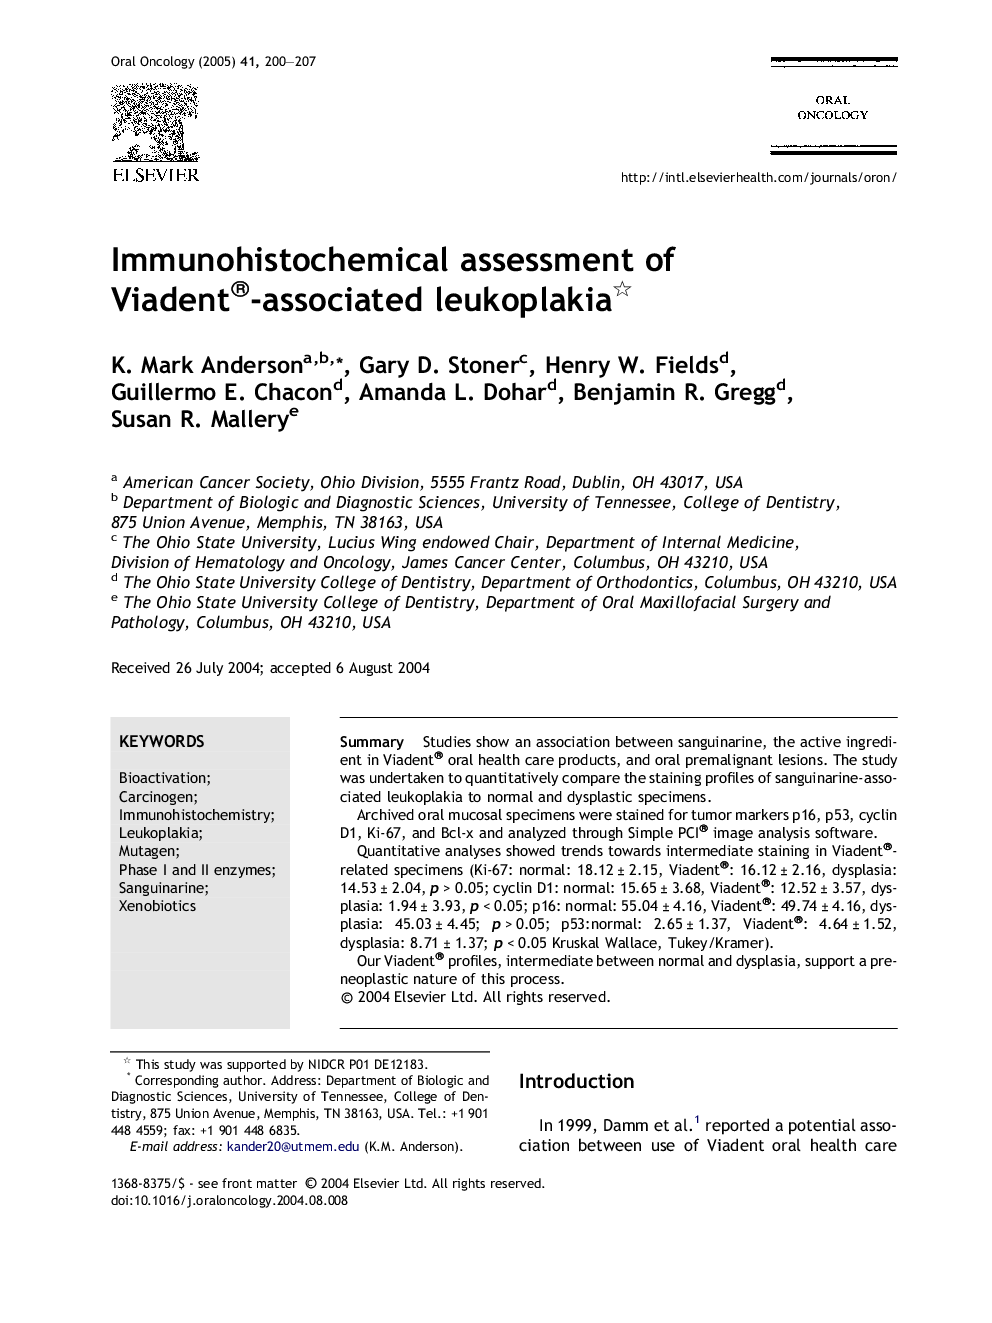 Immunohistochemical assessment of Viadent®-associated leukoplakia